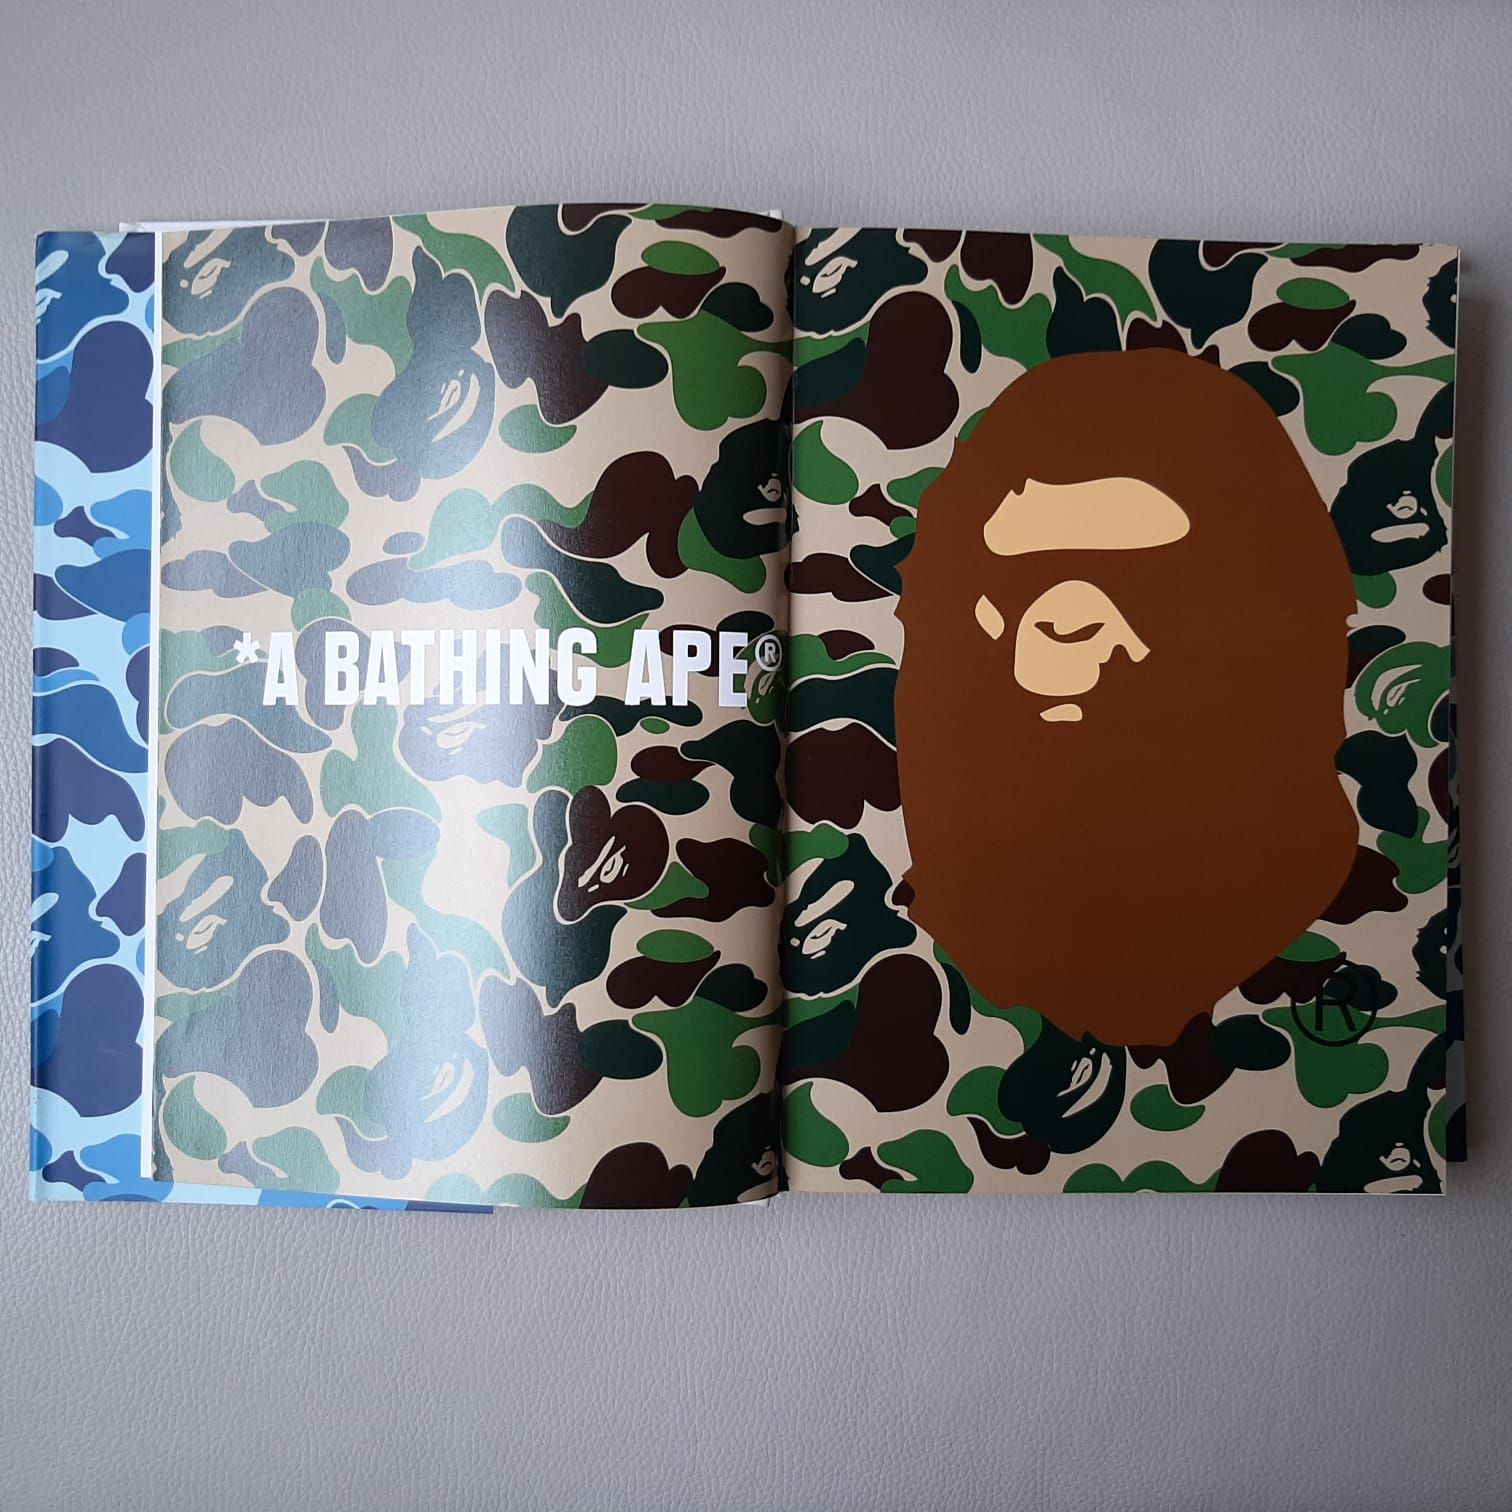 Bape BAPE (A Bathing Ape) Rizzoli Book | Grailed